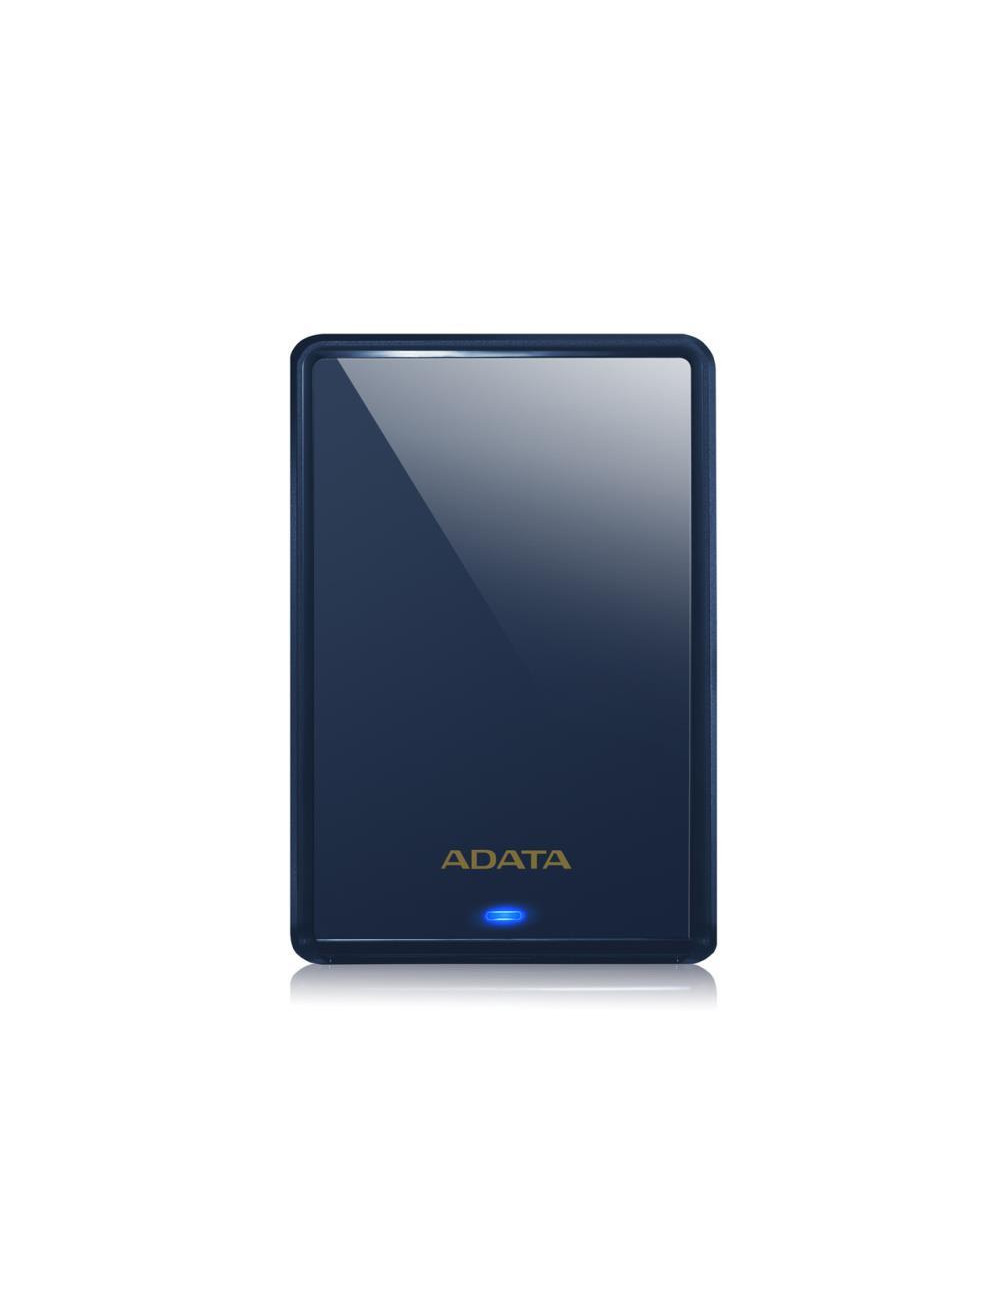 External HDD|ADATA|HV620S|1TB|USB 3.1|Colour Blue|AHV620S-1TU31-CBL